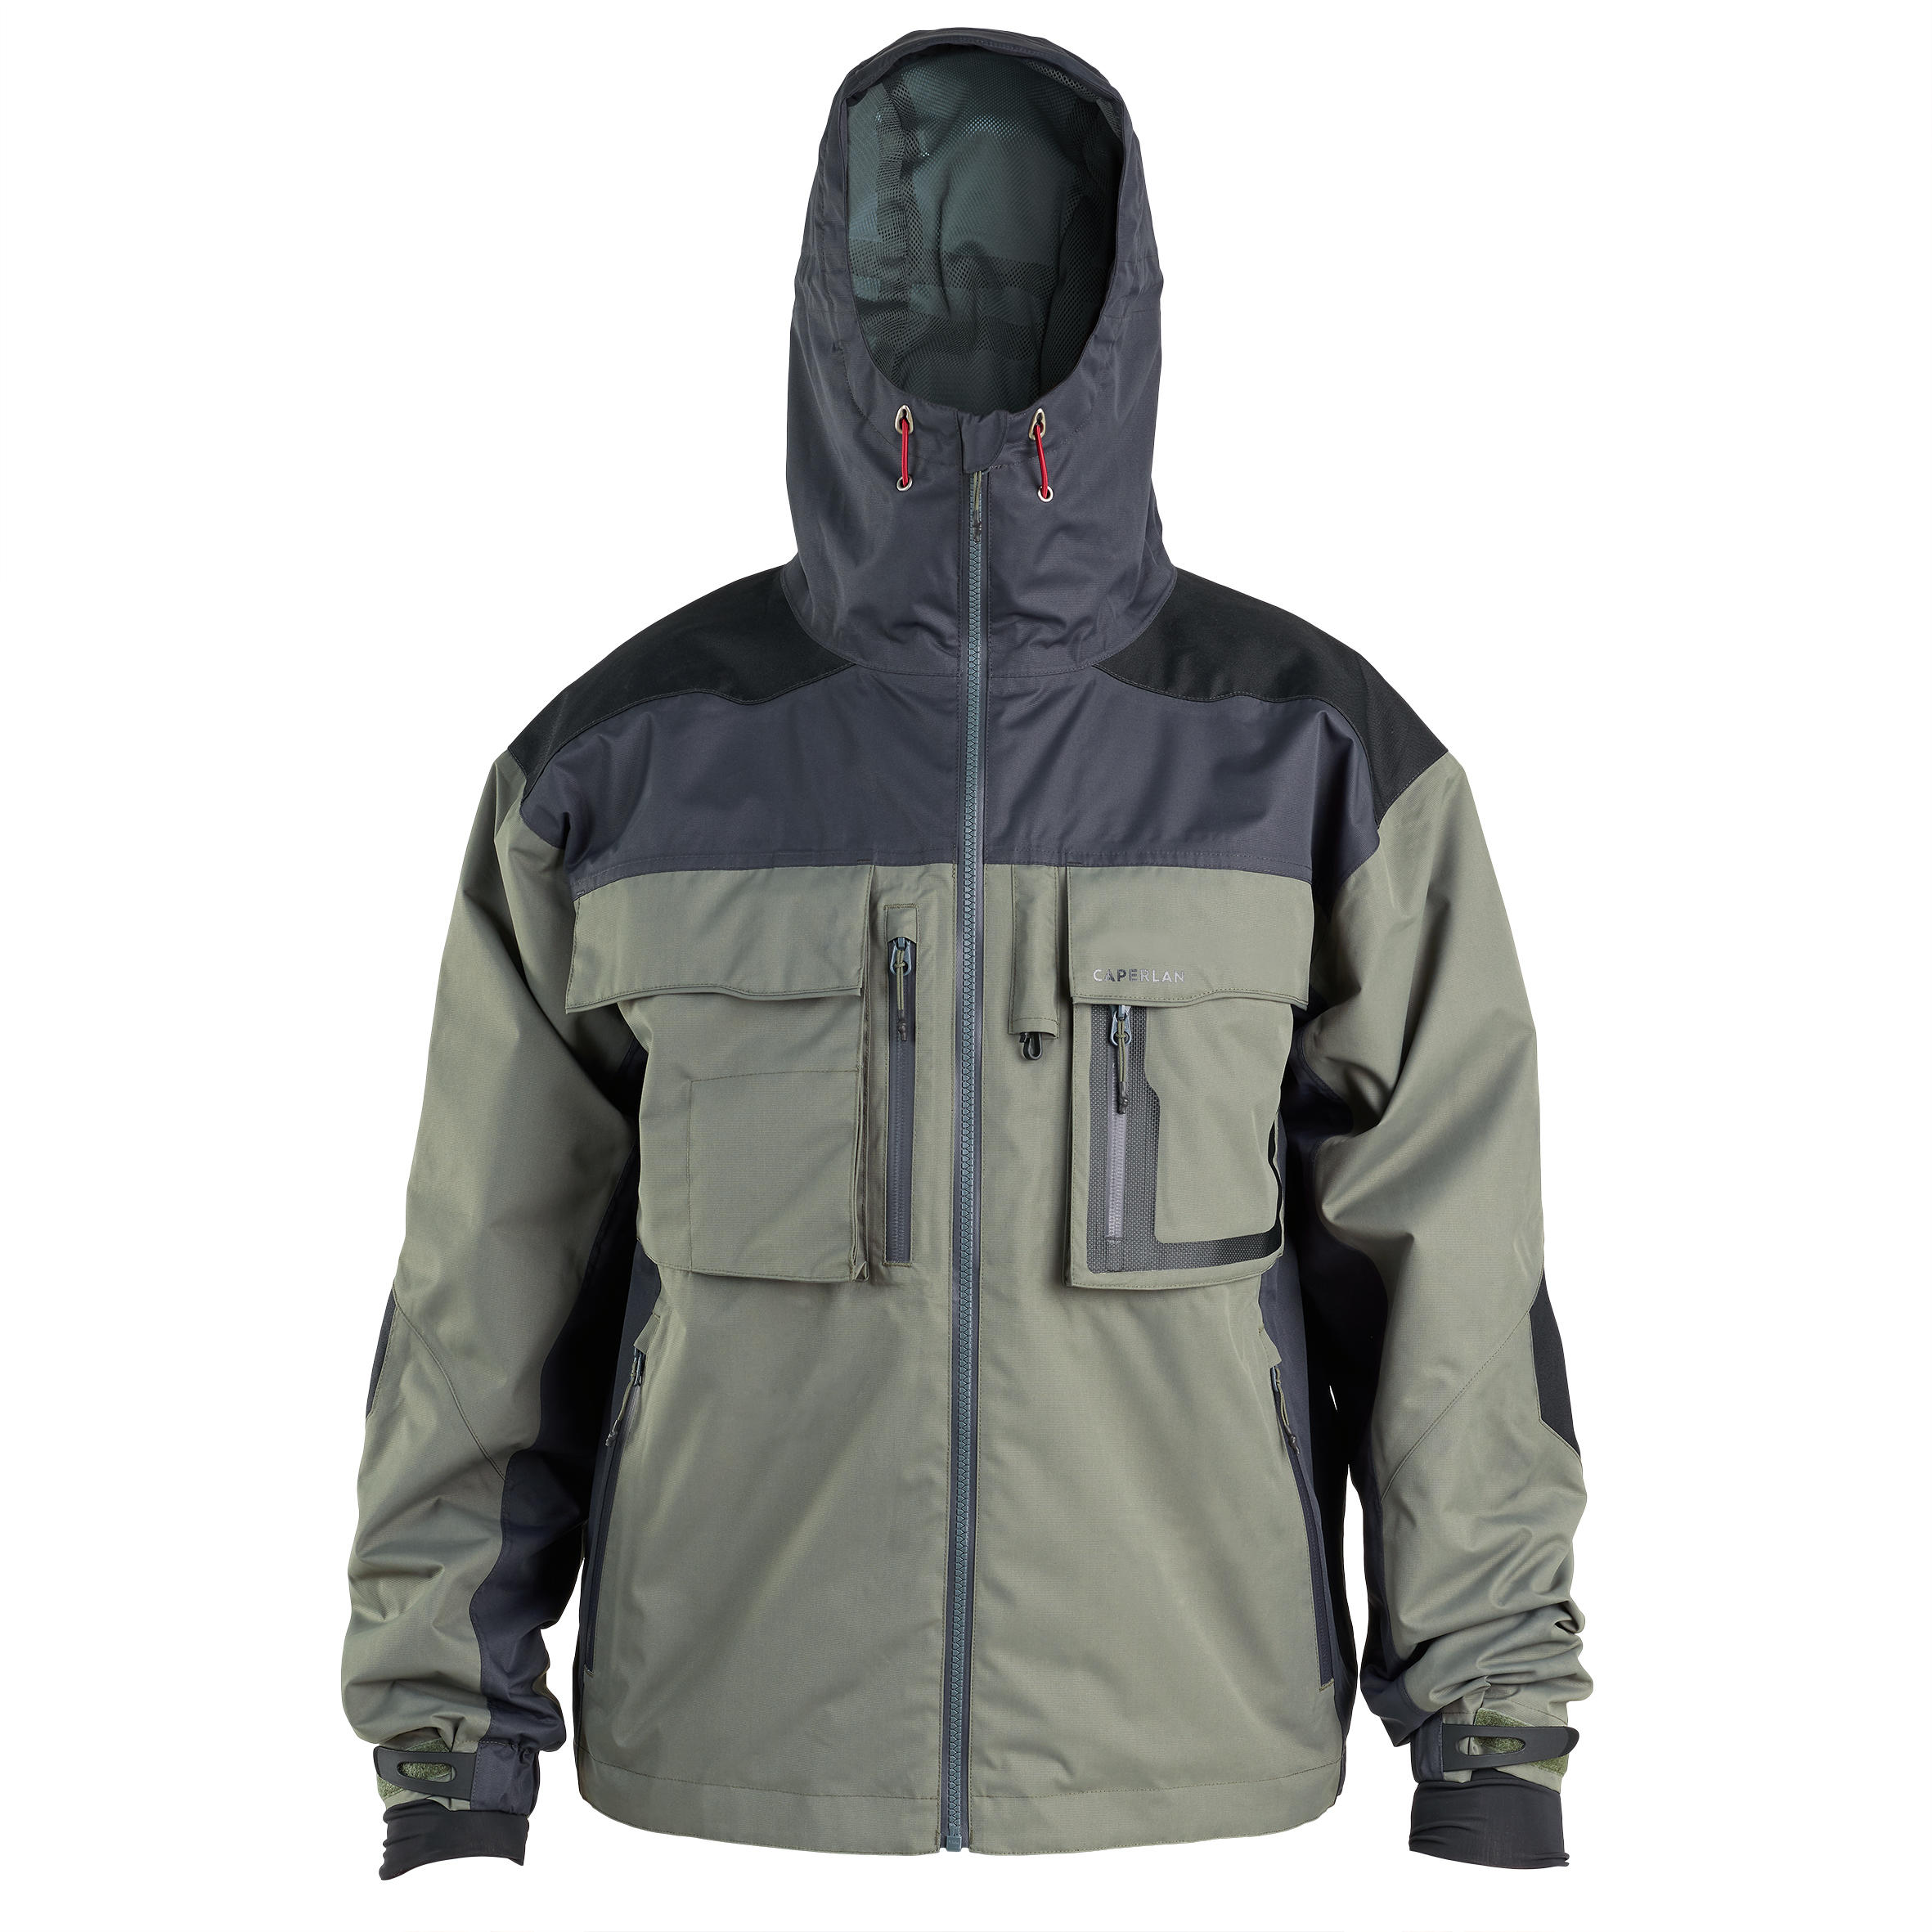 Fishing rain jacket 500 - Adults - Khaki brown, Carbon grey